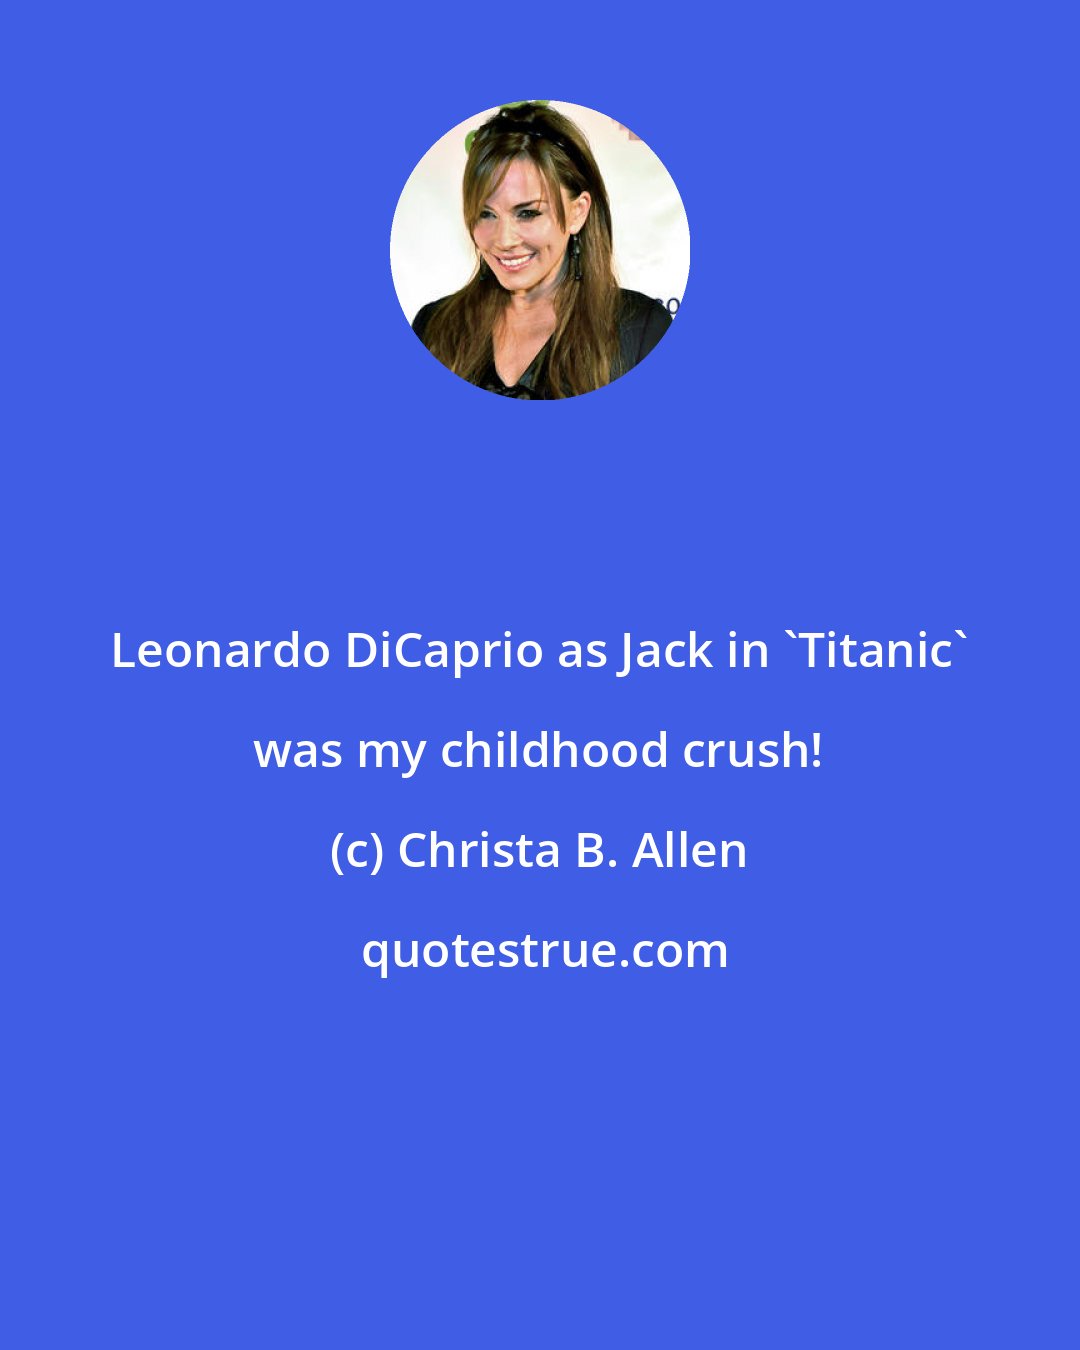 Christa B. Allen: Leonardo DiCaprio as Jack in 'Titanic' was my childhood crush!